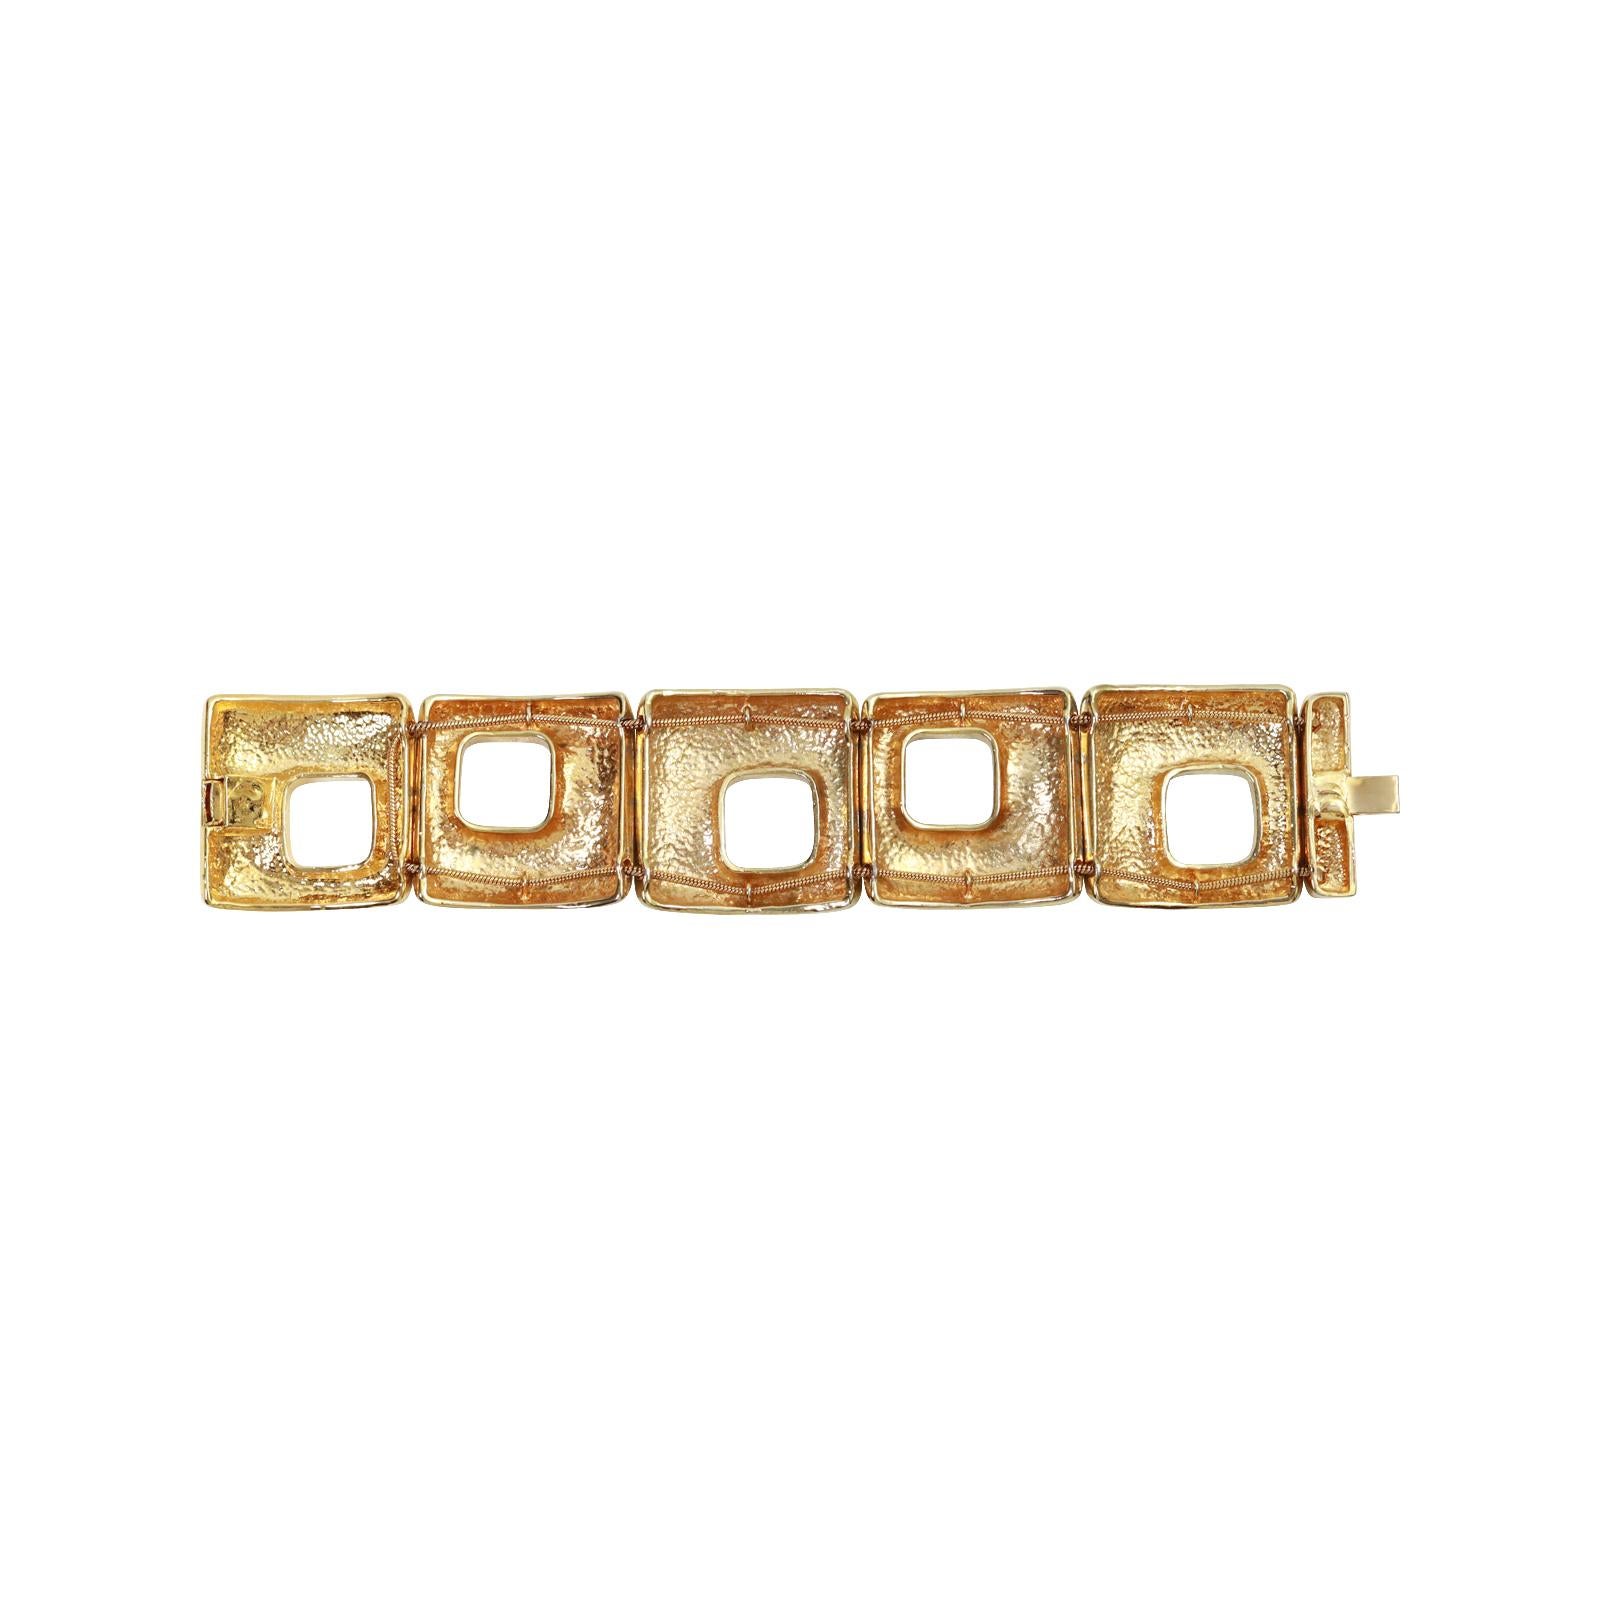 Vintage Gold Tone Heavy Link Bracelet Circa 1980s For Sale 2